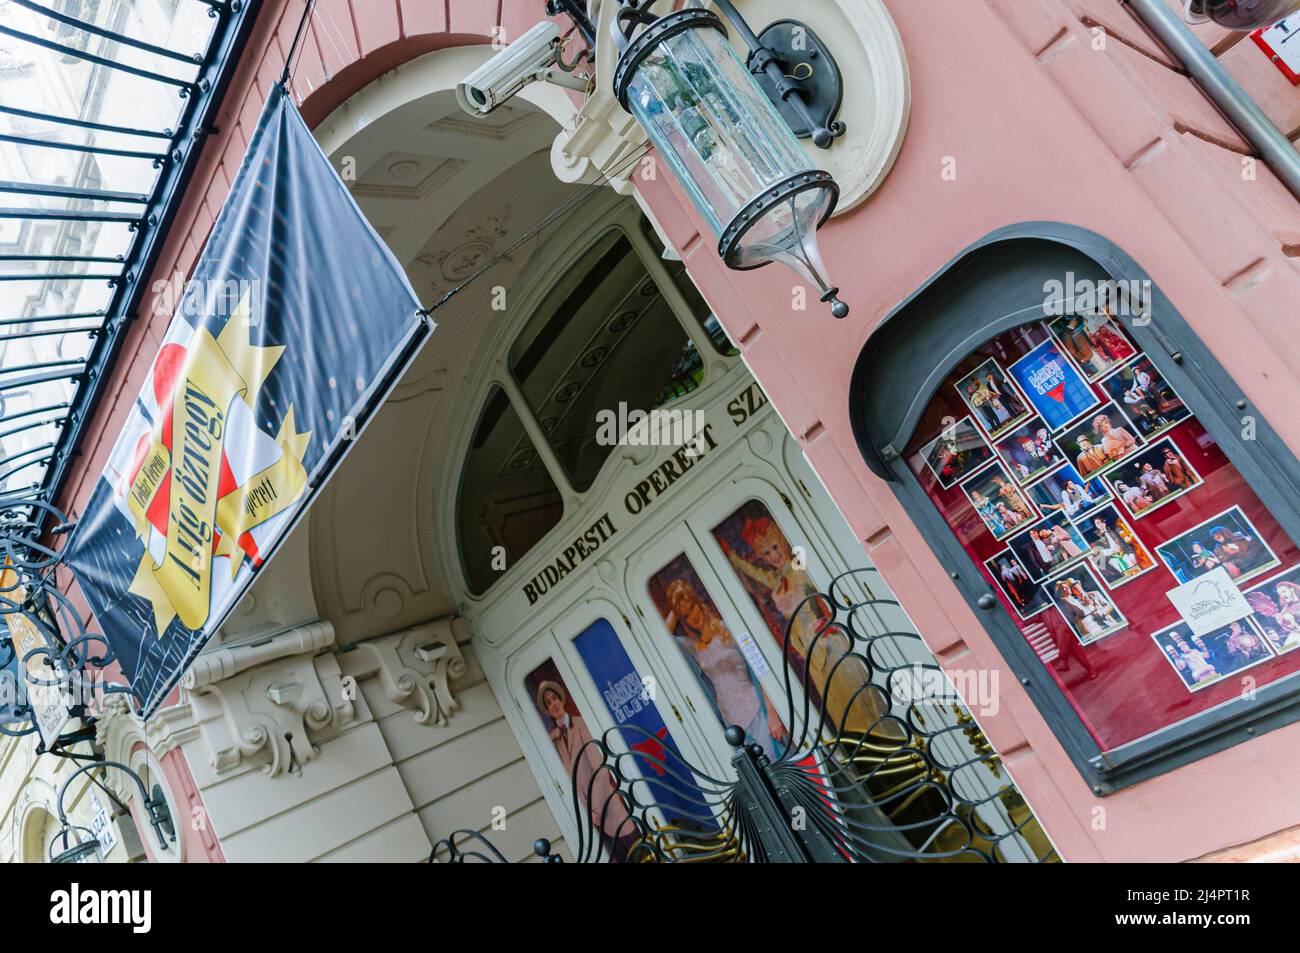 Entrance to the Budapest Operetta Theatre, Budapest, Hungary. Stock Photo